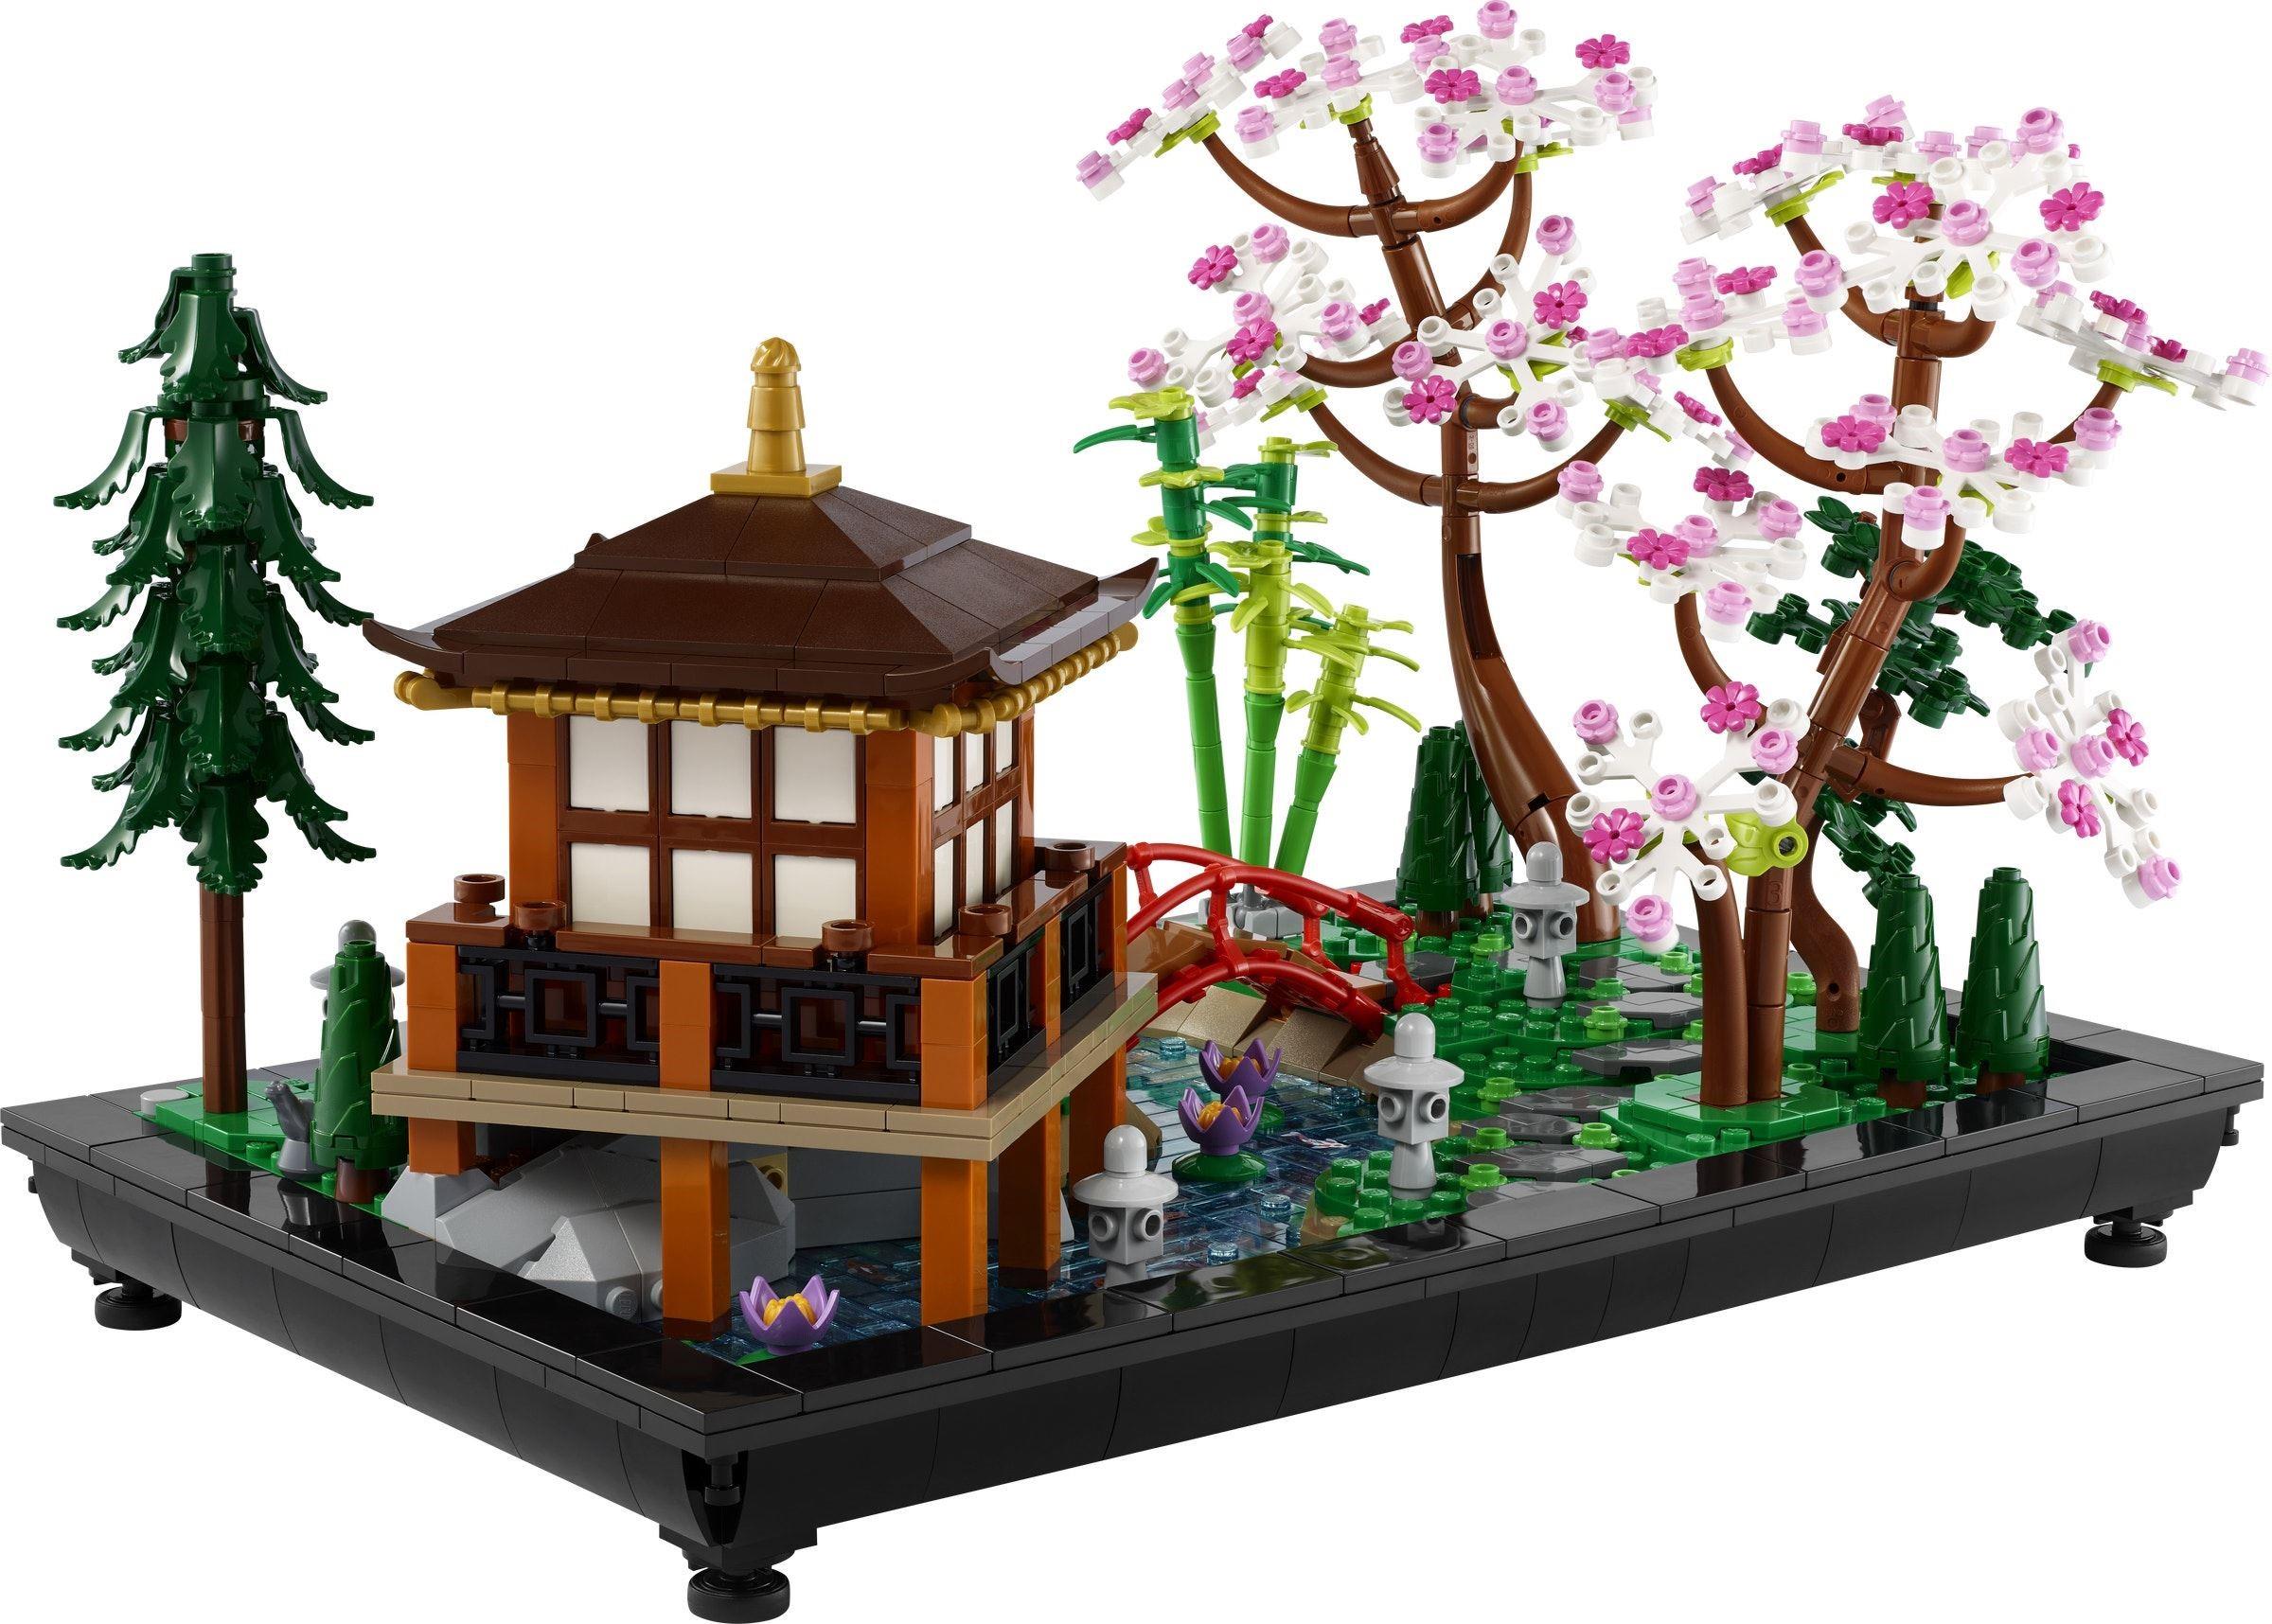 LEGO 10315 Tranquil Garden BrickEconomy